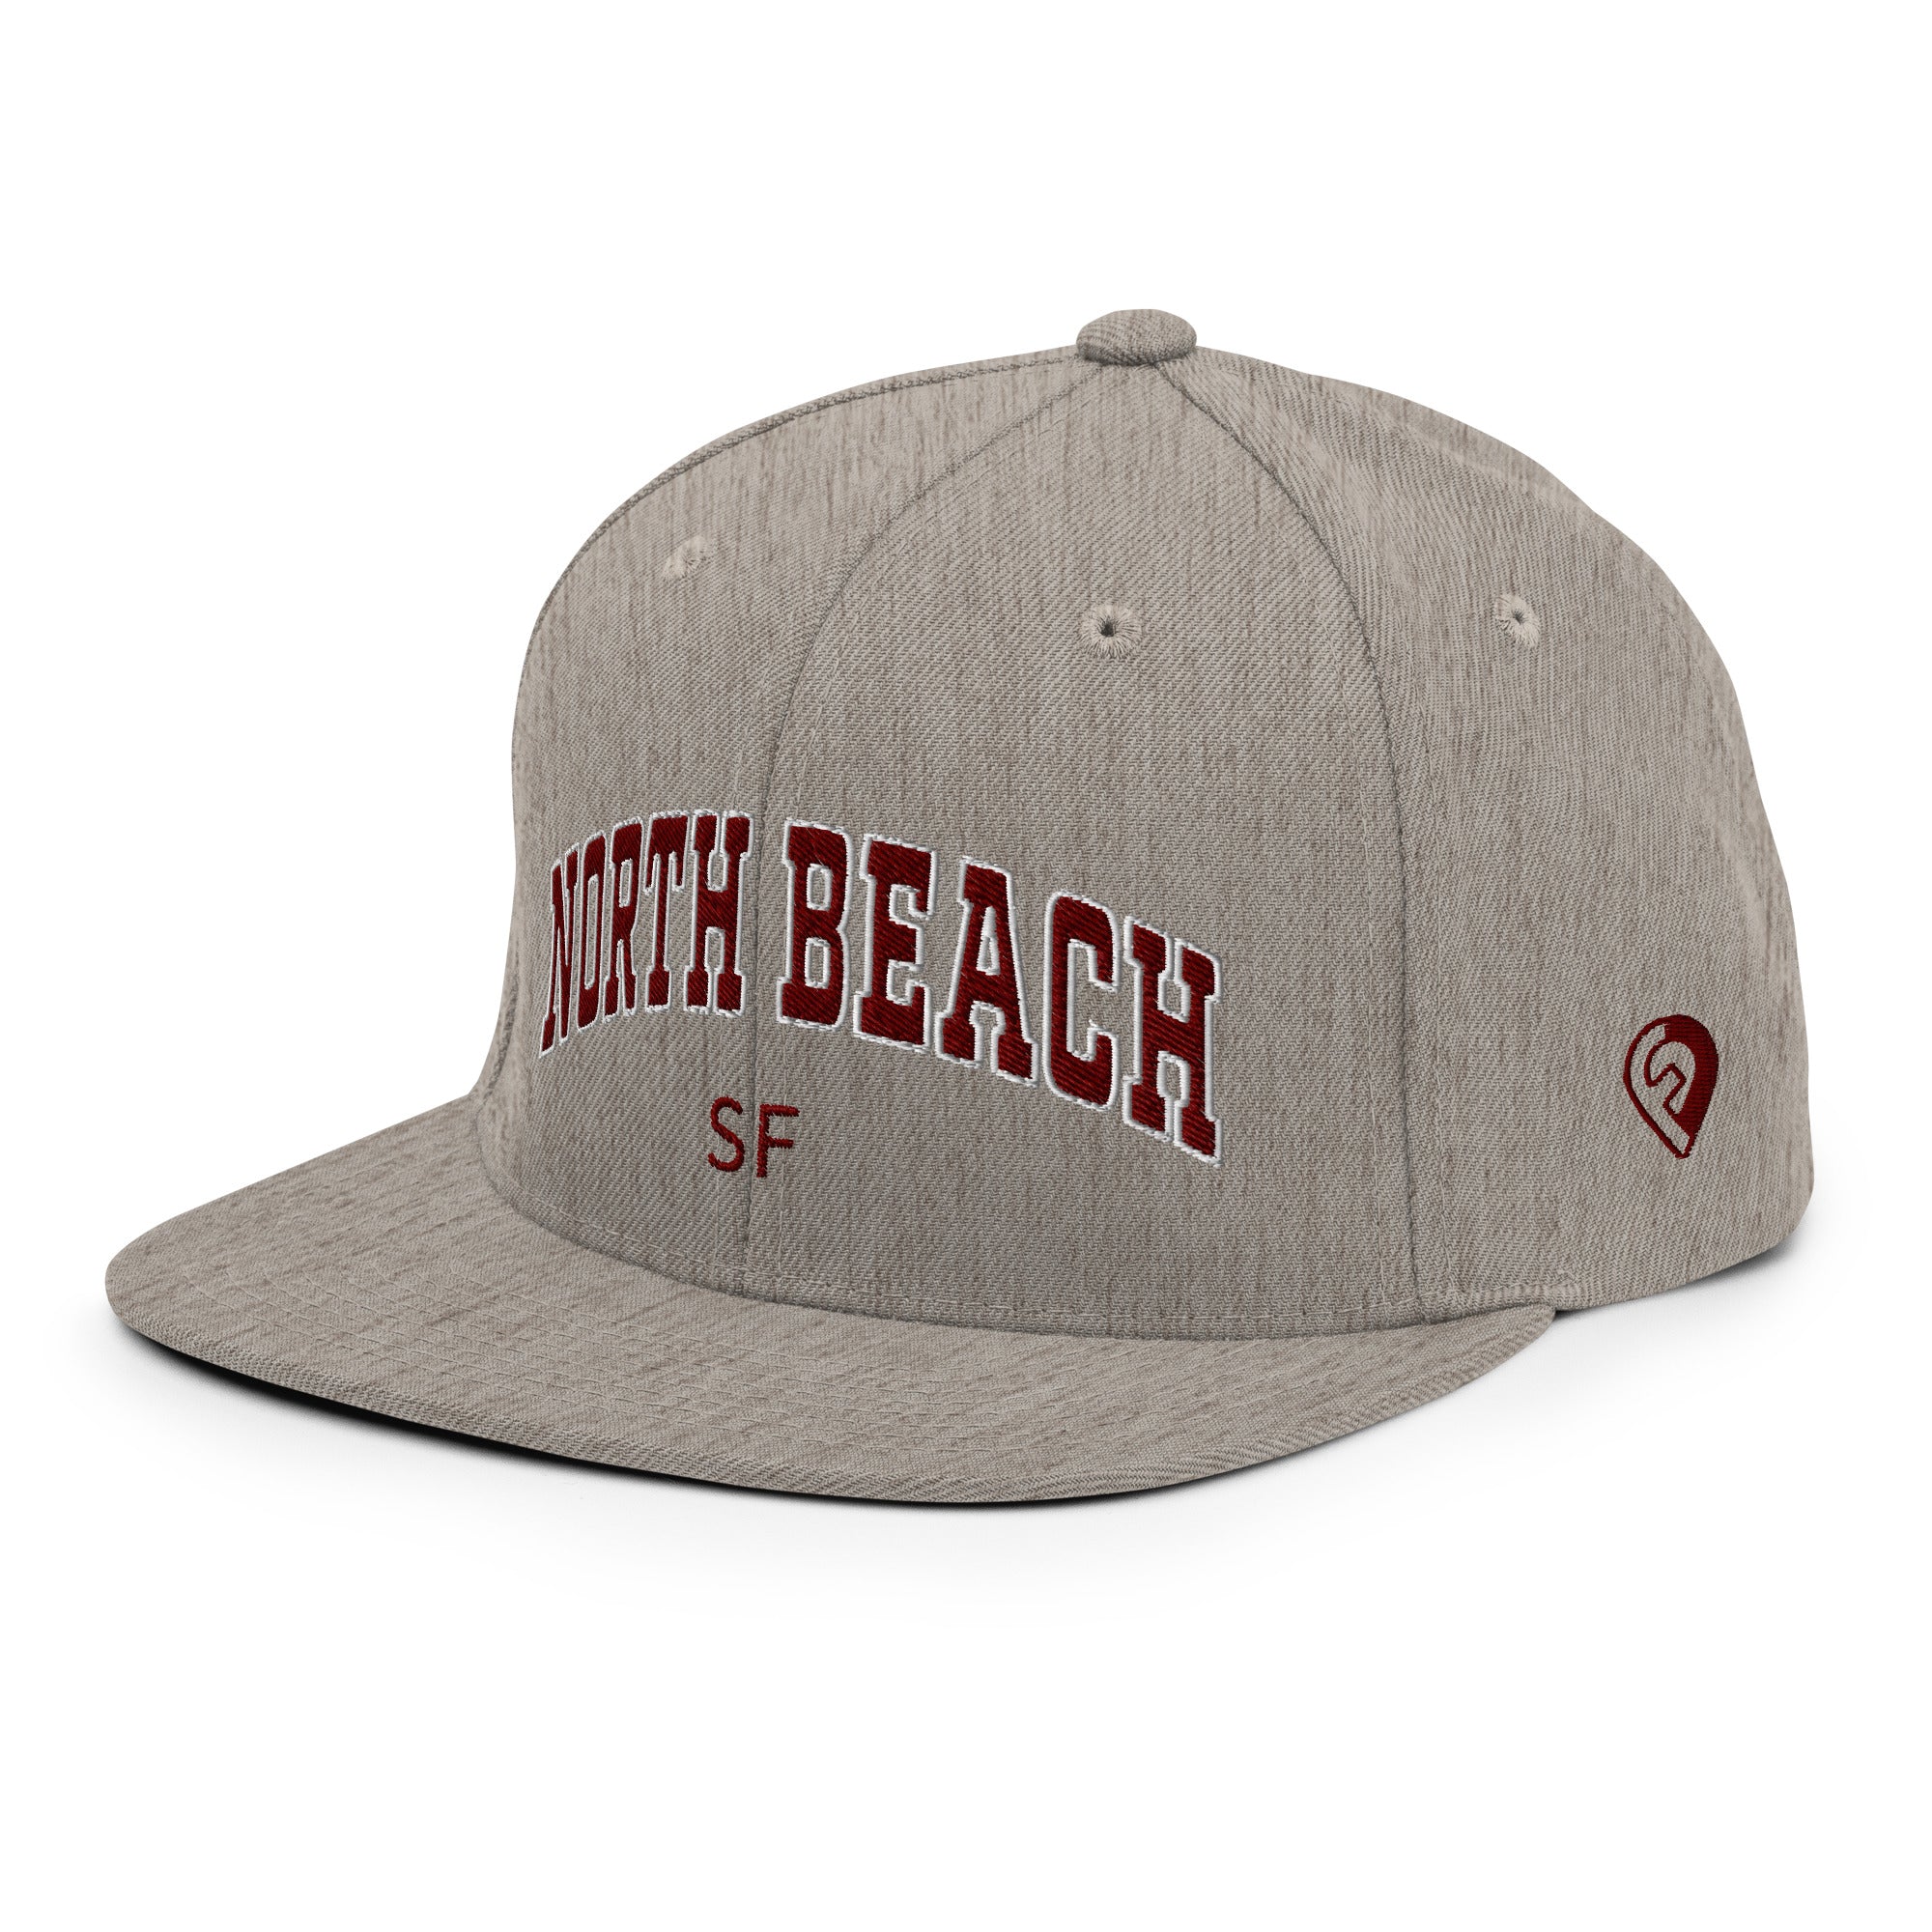 Bold Snapback Hat - North Beach | San Francisco, CA